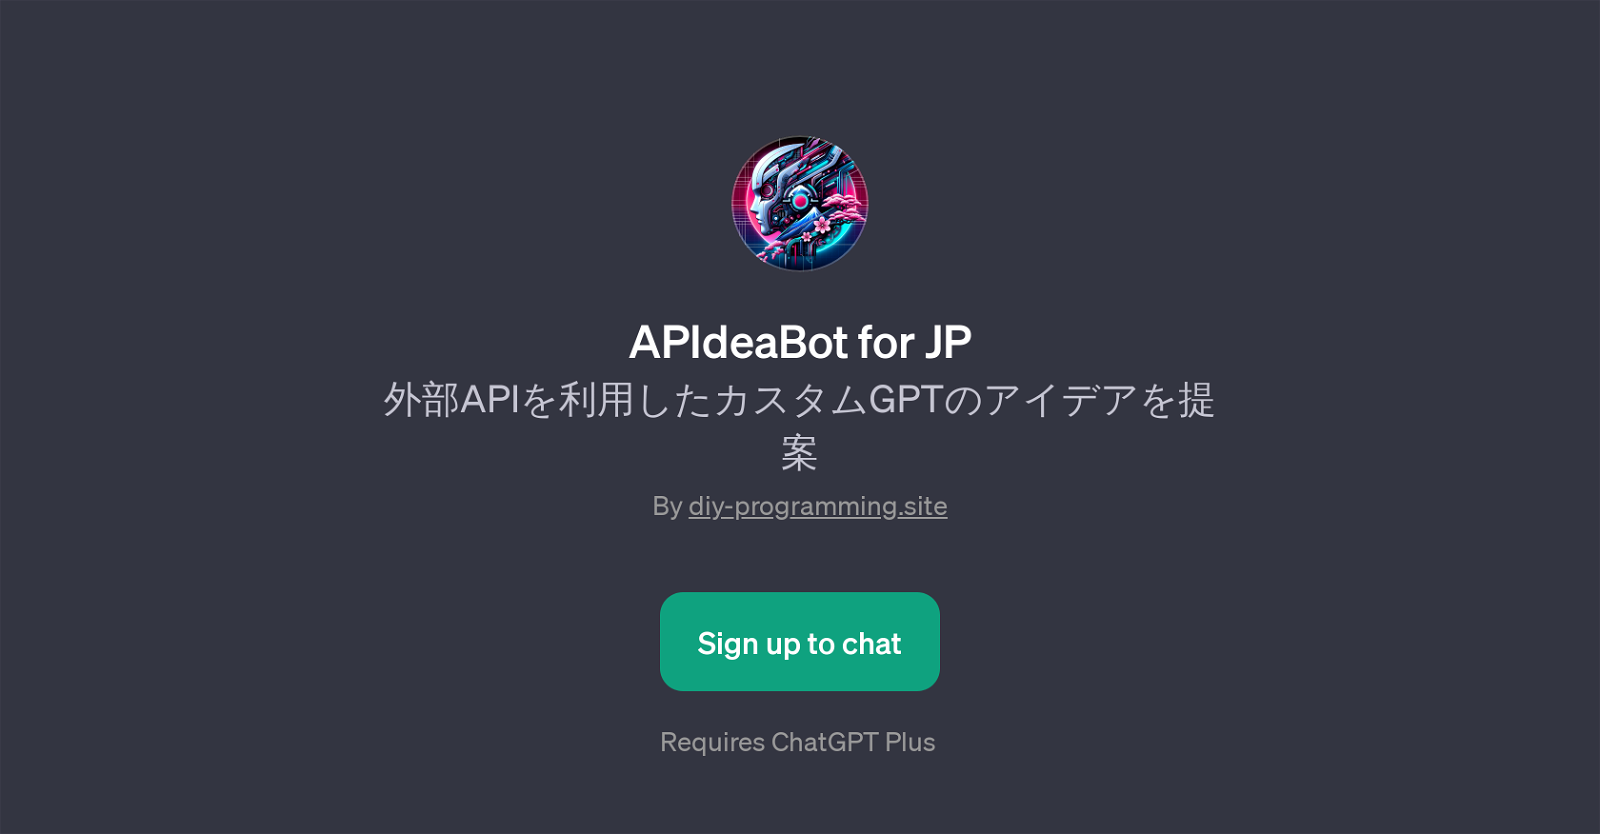 APIdeaBot for JP website